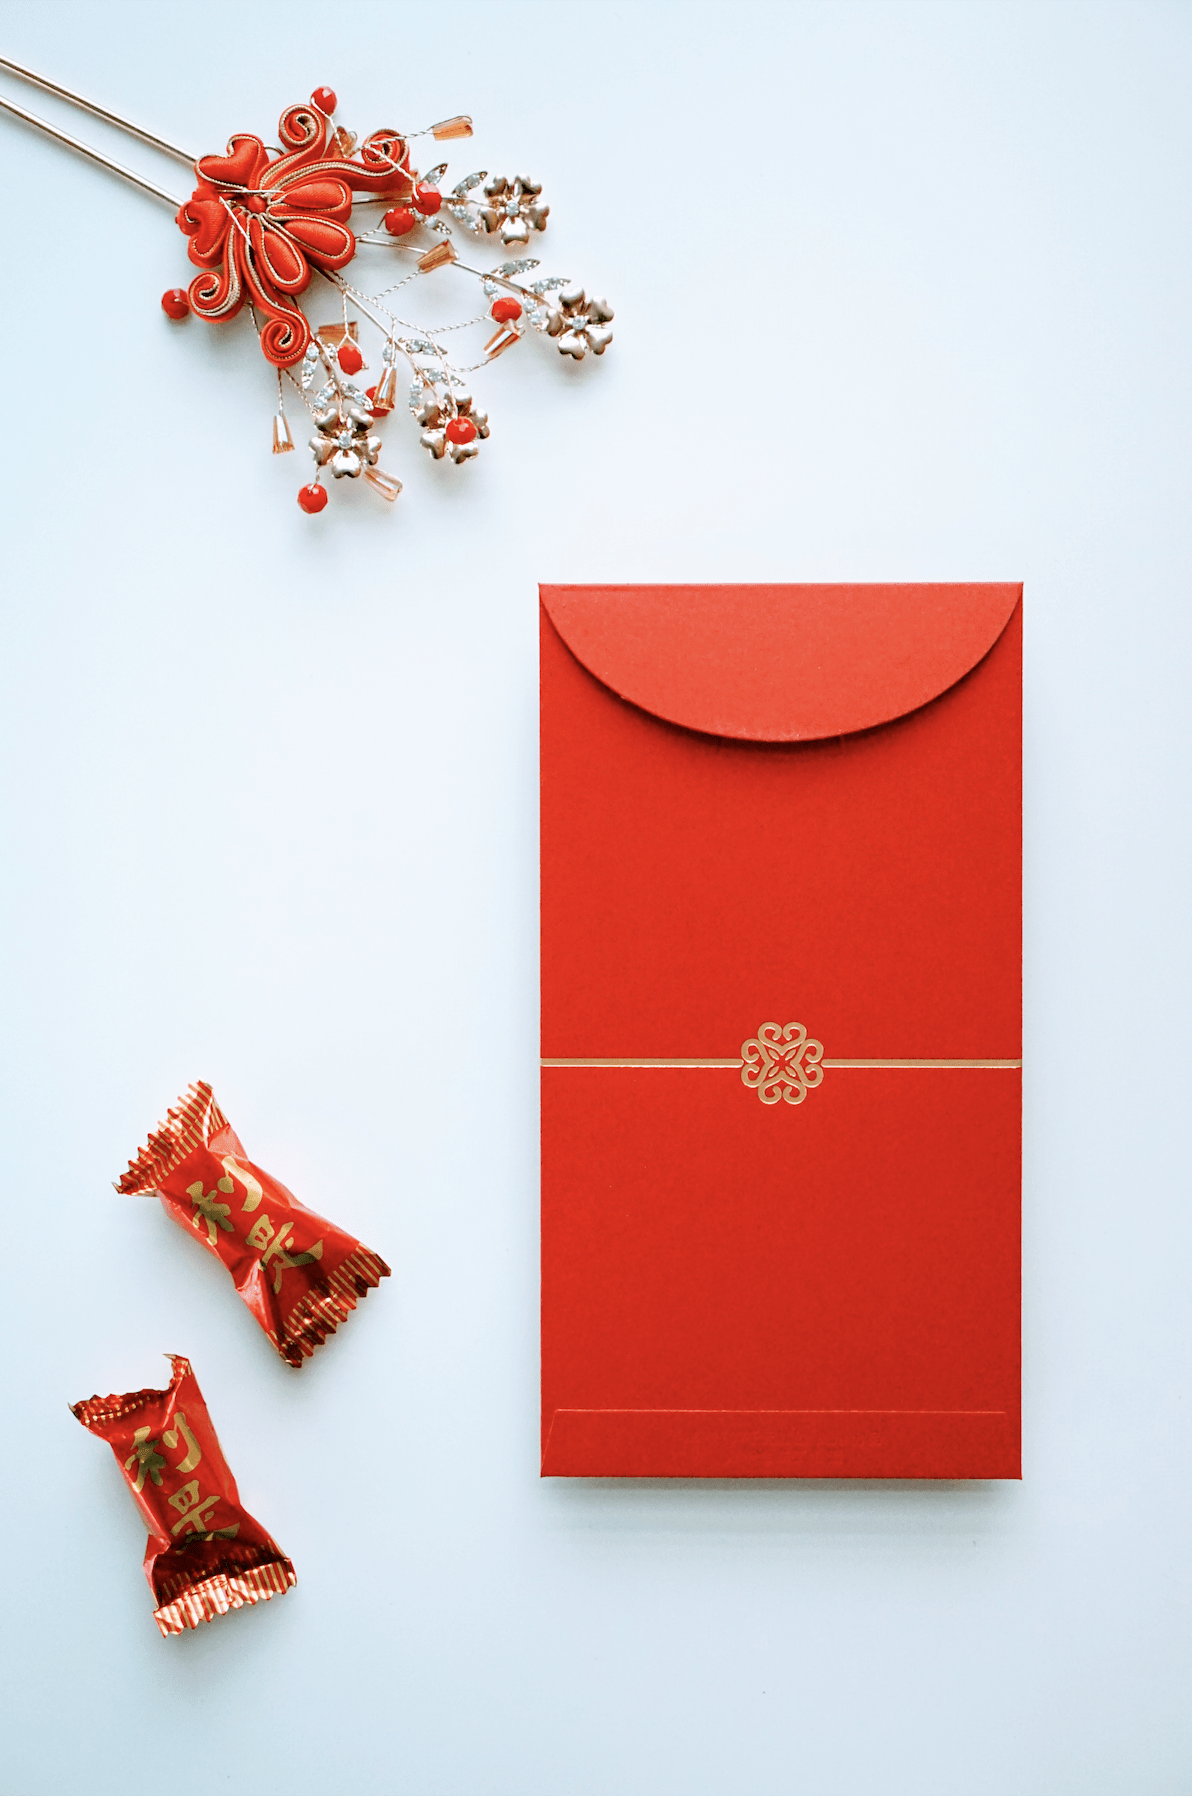 Red Pocket Envelope 2021 – Special Special